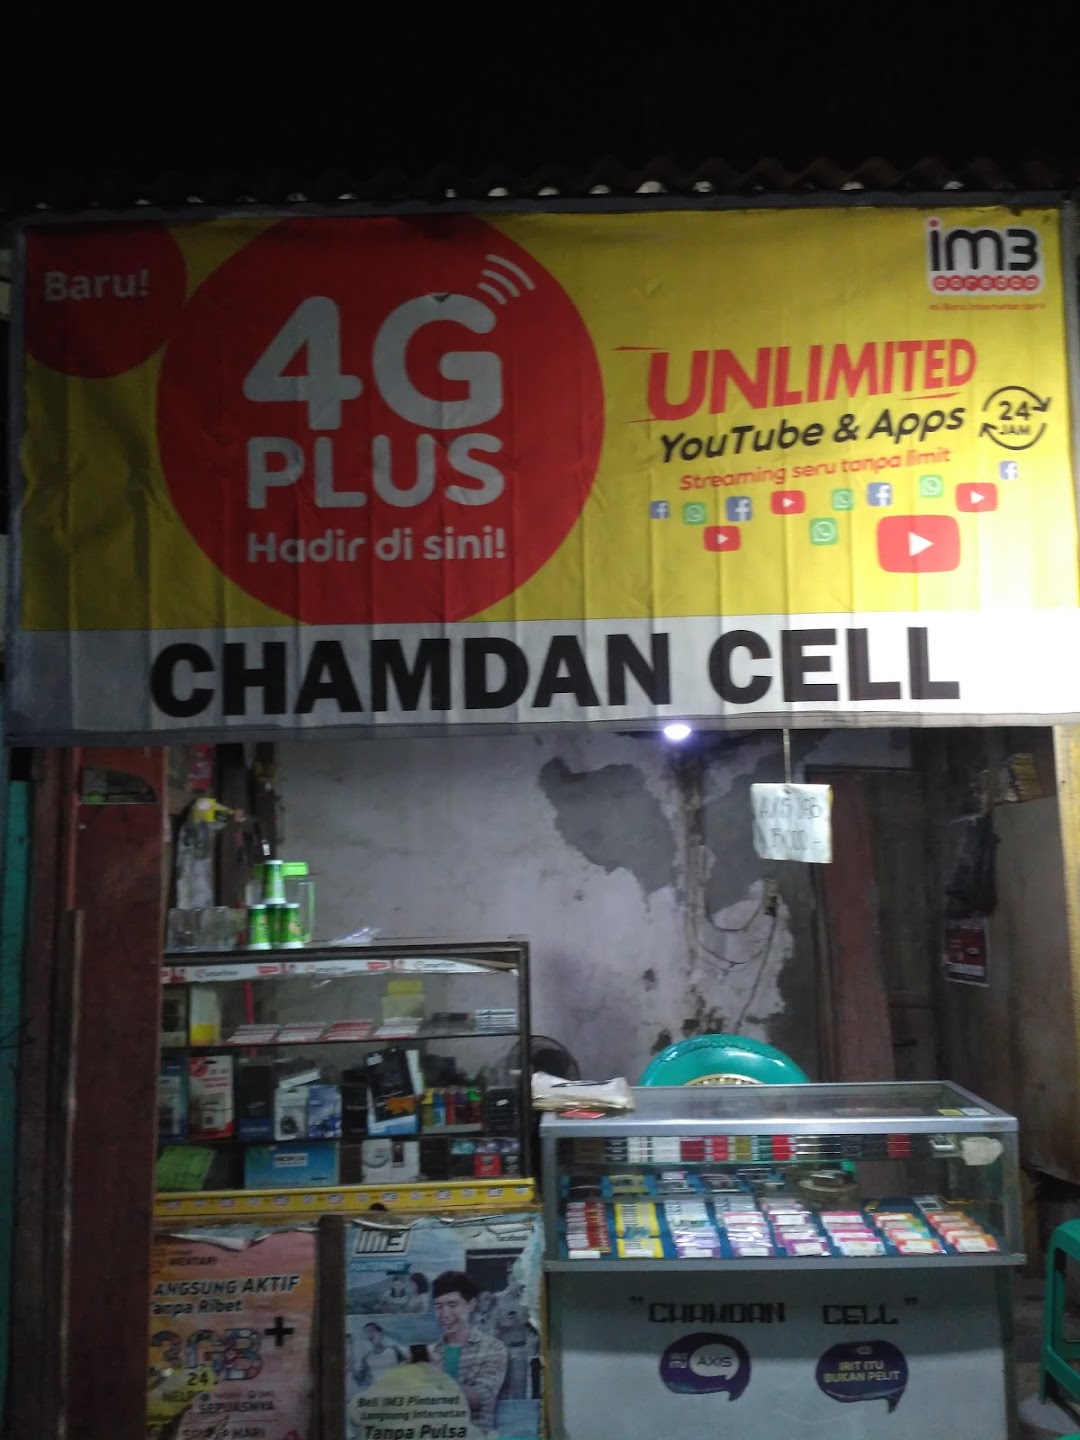 Chamdan cell